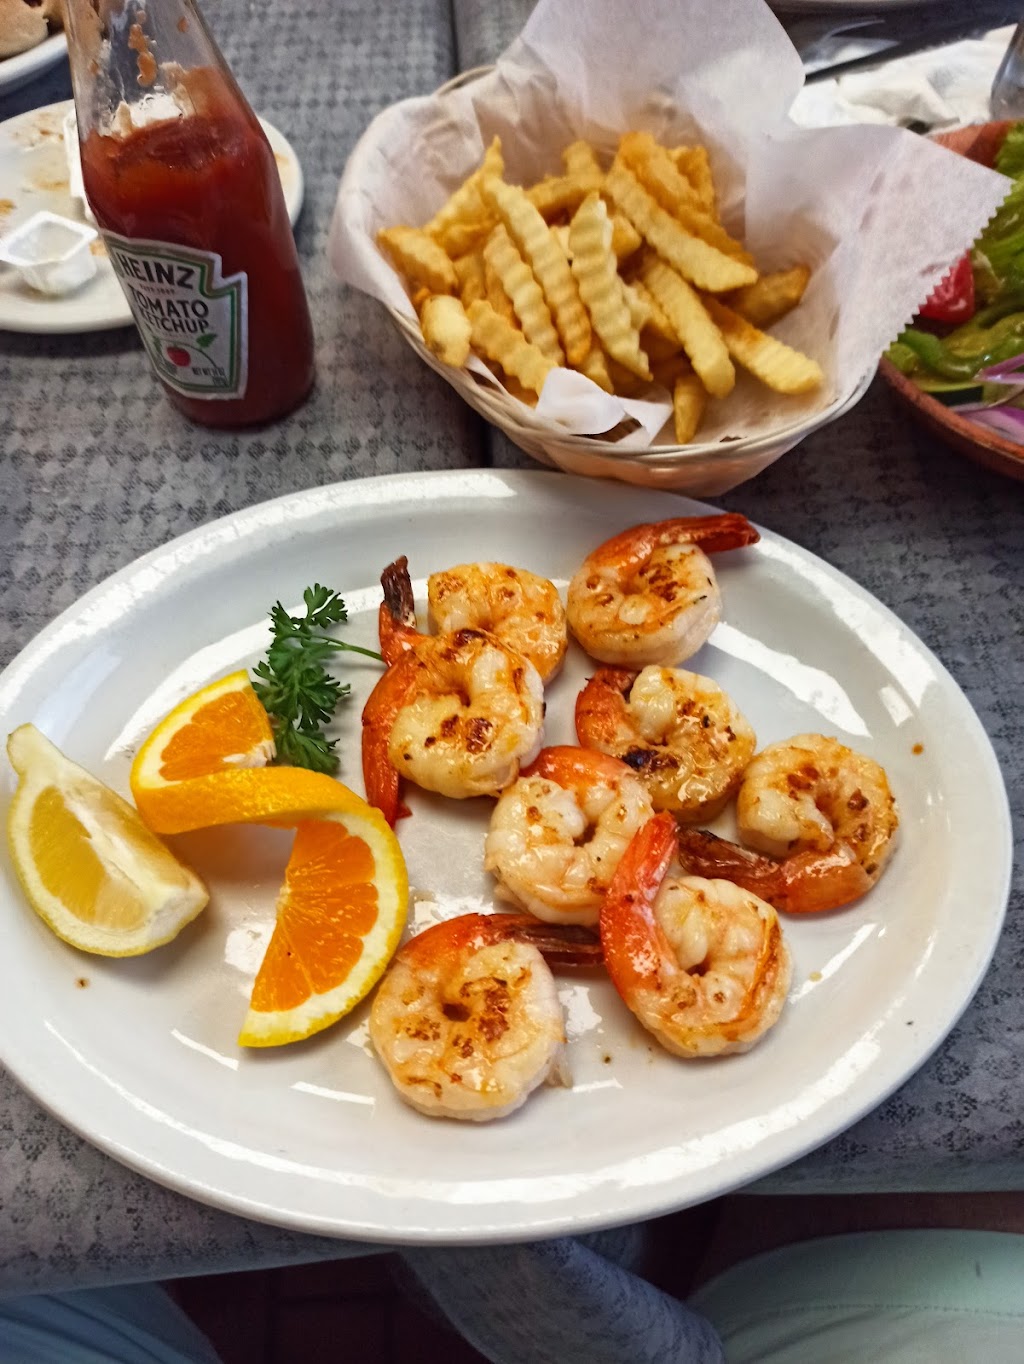 Jimmys Neighborhood Restaurant | 1203 Gulf Rd, Tarpon Springs, FL 34689, USA | Phone: (727) 935-4864